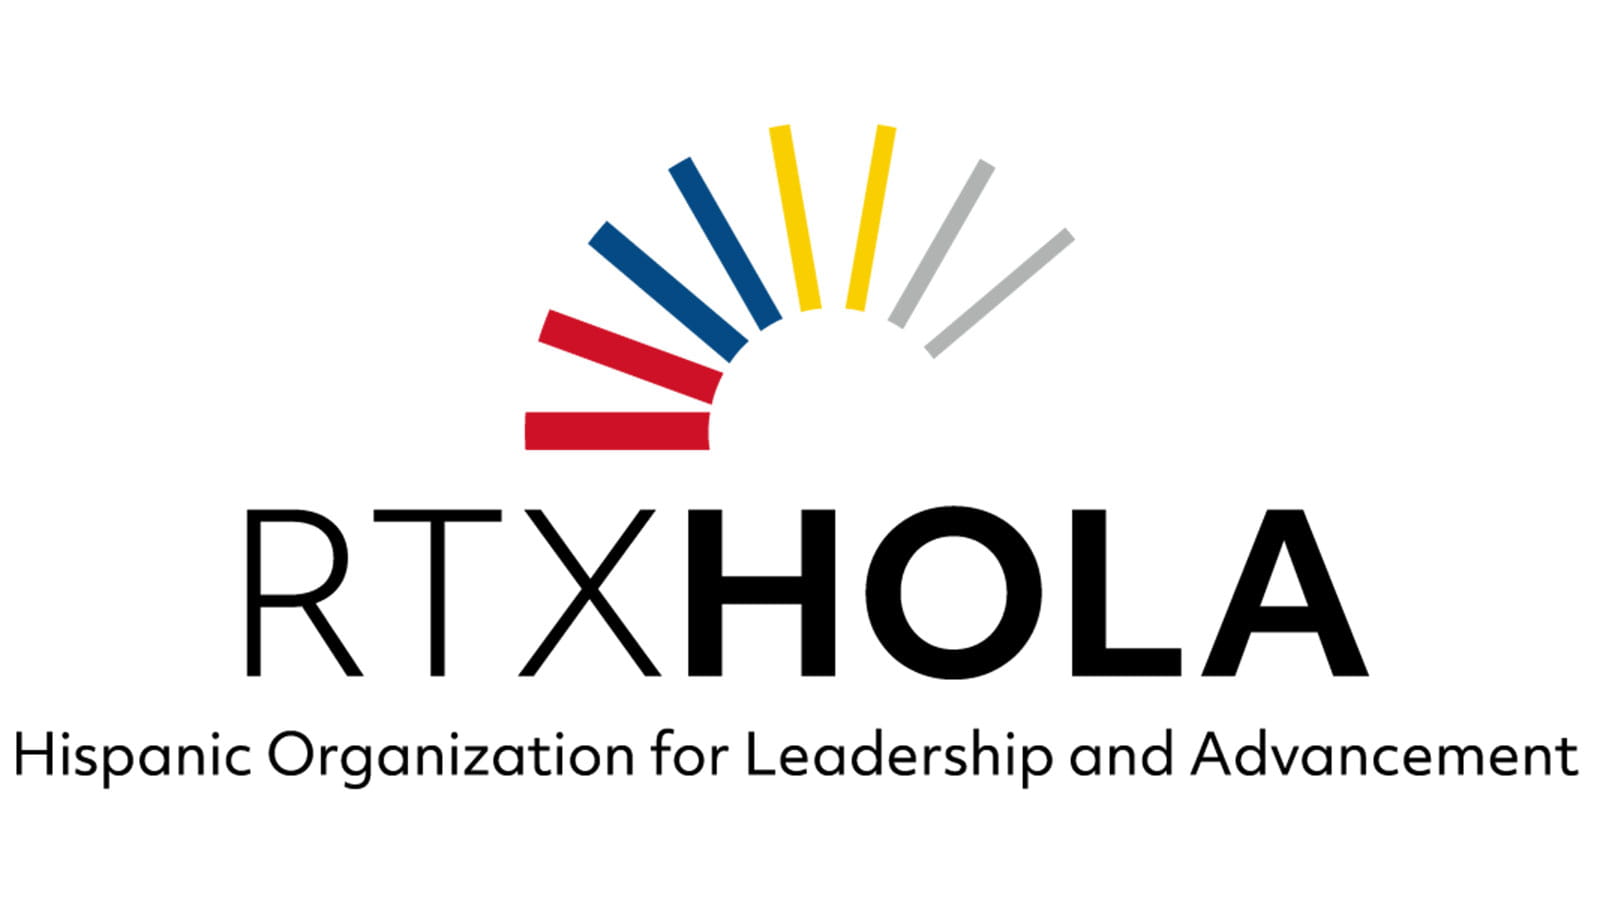 RTXHOLA hispanic organization for leadership and advancement